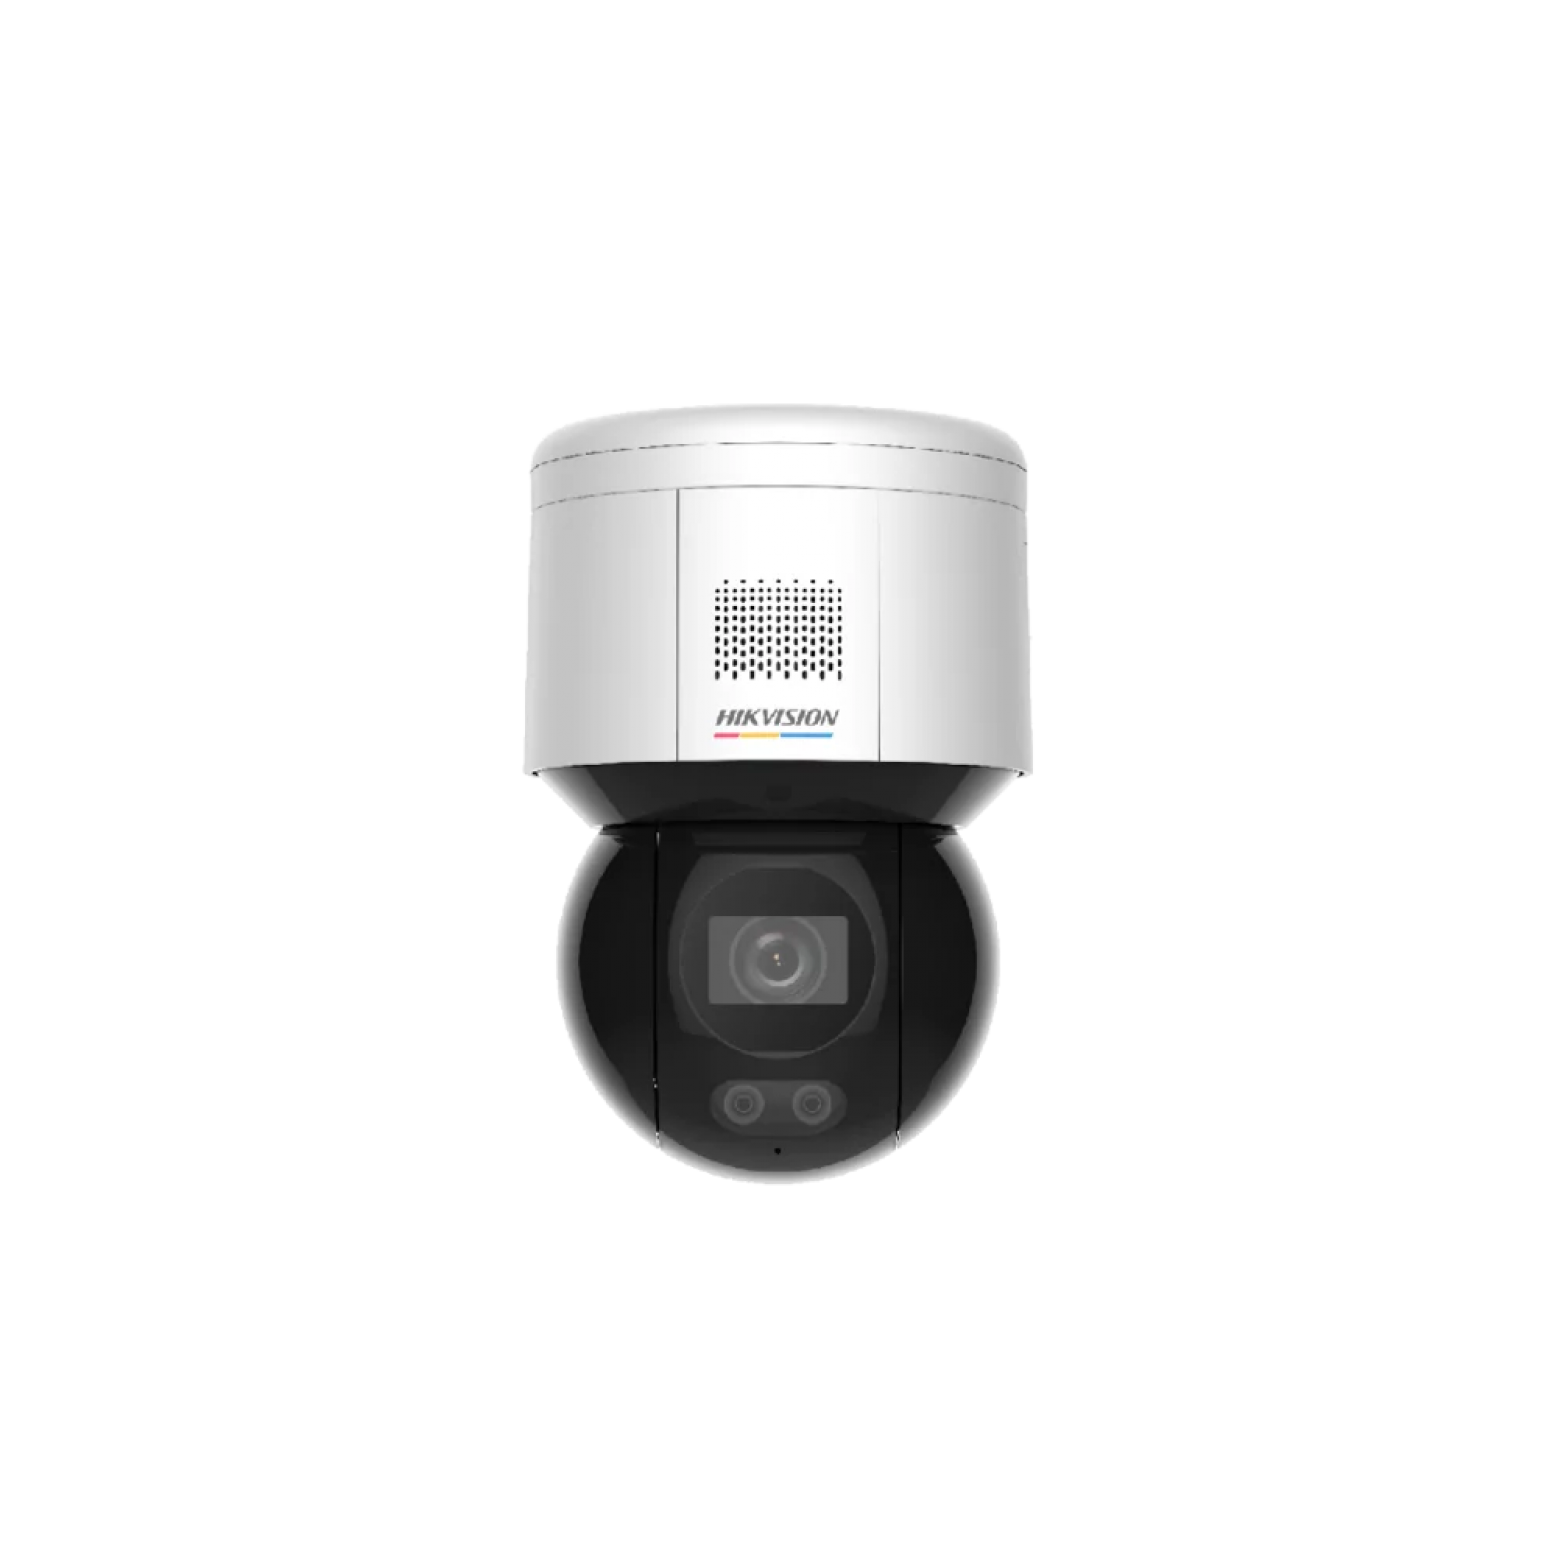 Kamera Hikvision DS-2DE3A400BW-DE - 4 megapiksele - ColorVu - obrotowa i uchylna